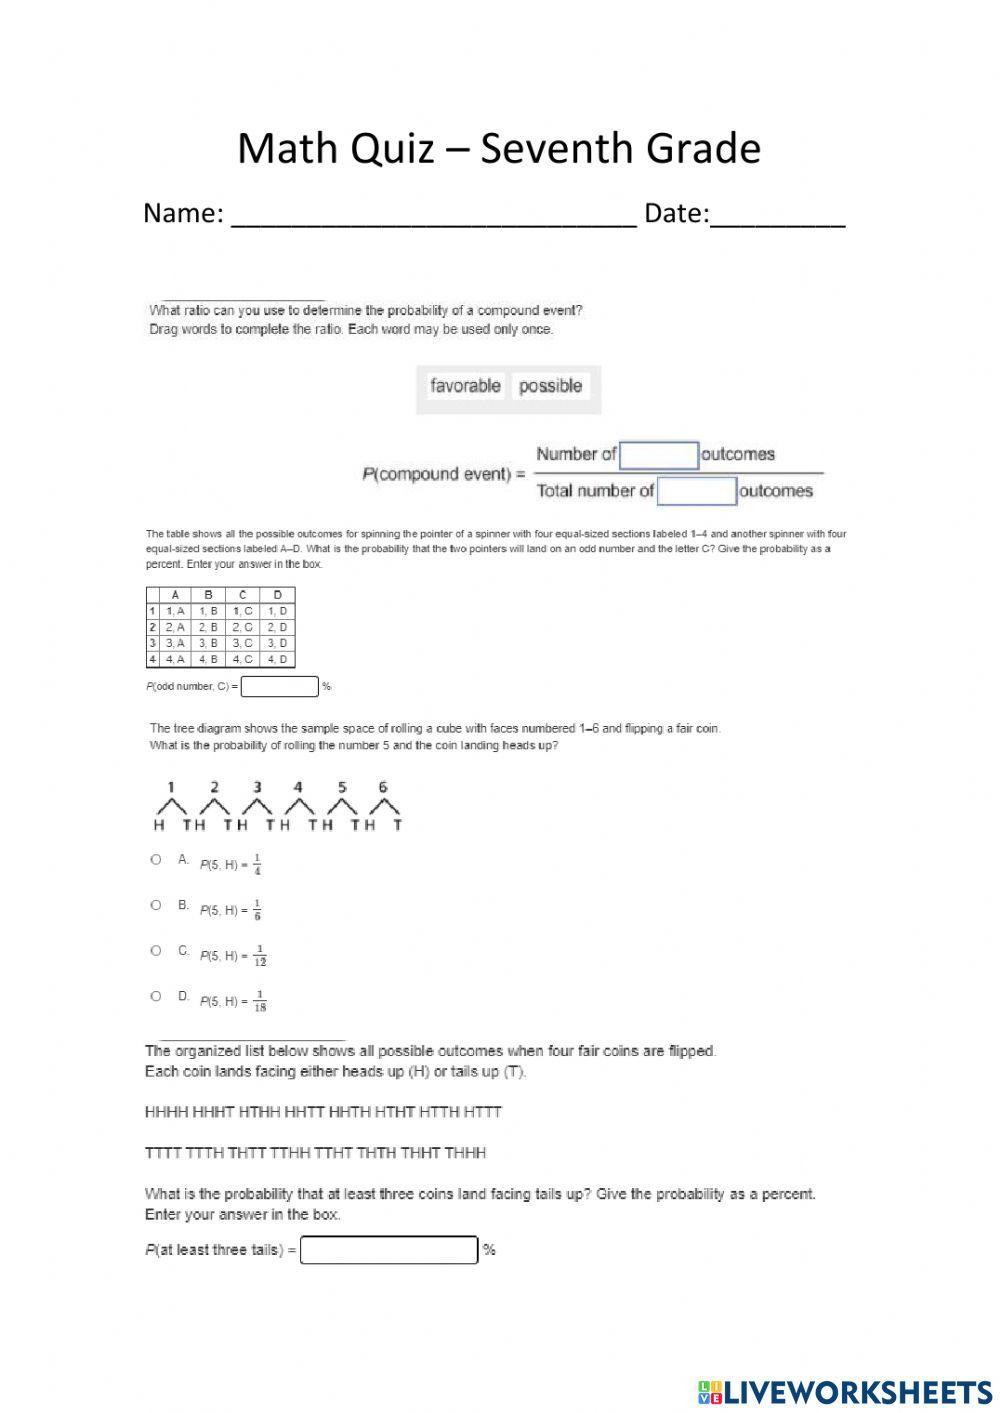 Math Quiz - 7th Grade